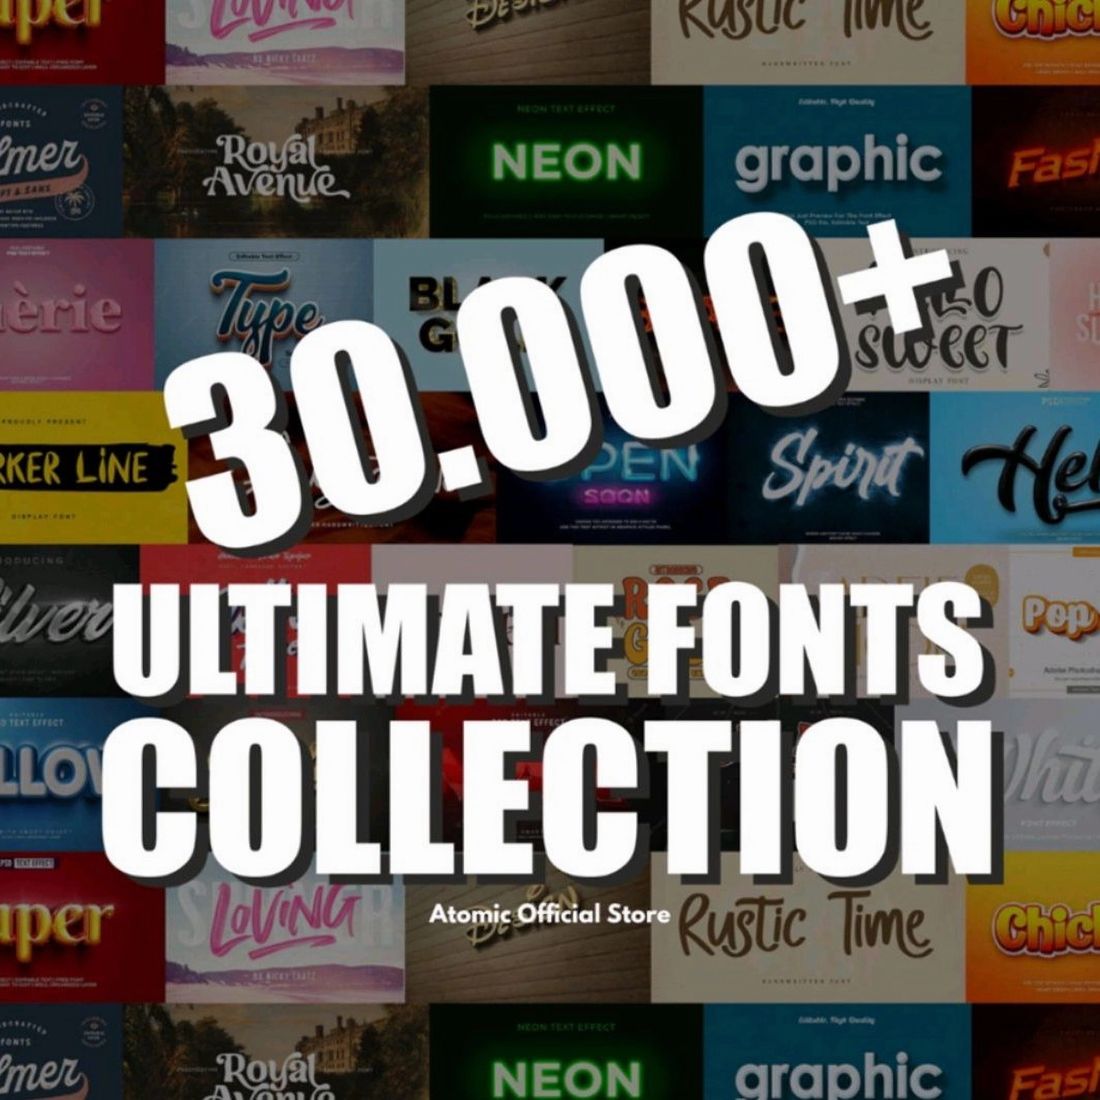 30,000 Ultimate Premium Font Collection Bundle cover image.